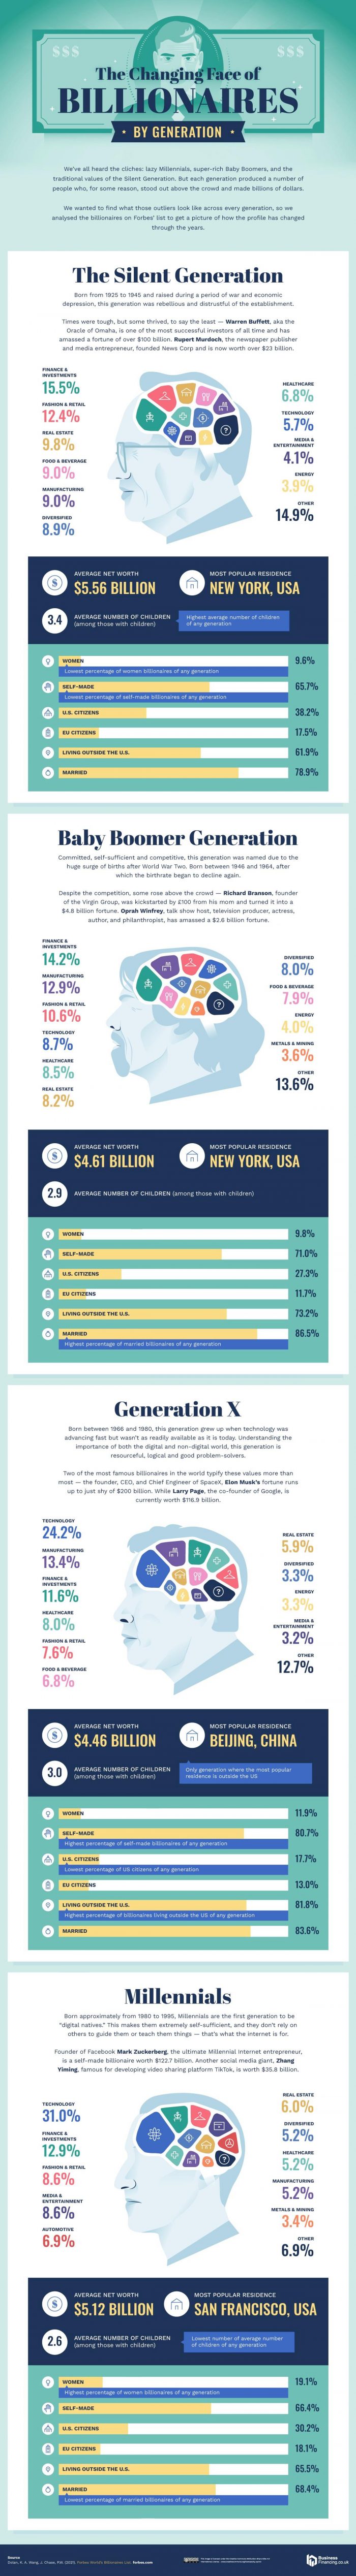 billionaires-by-generation